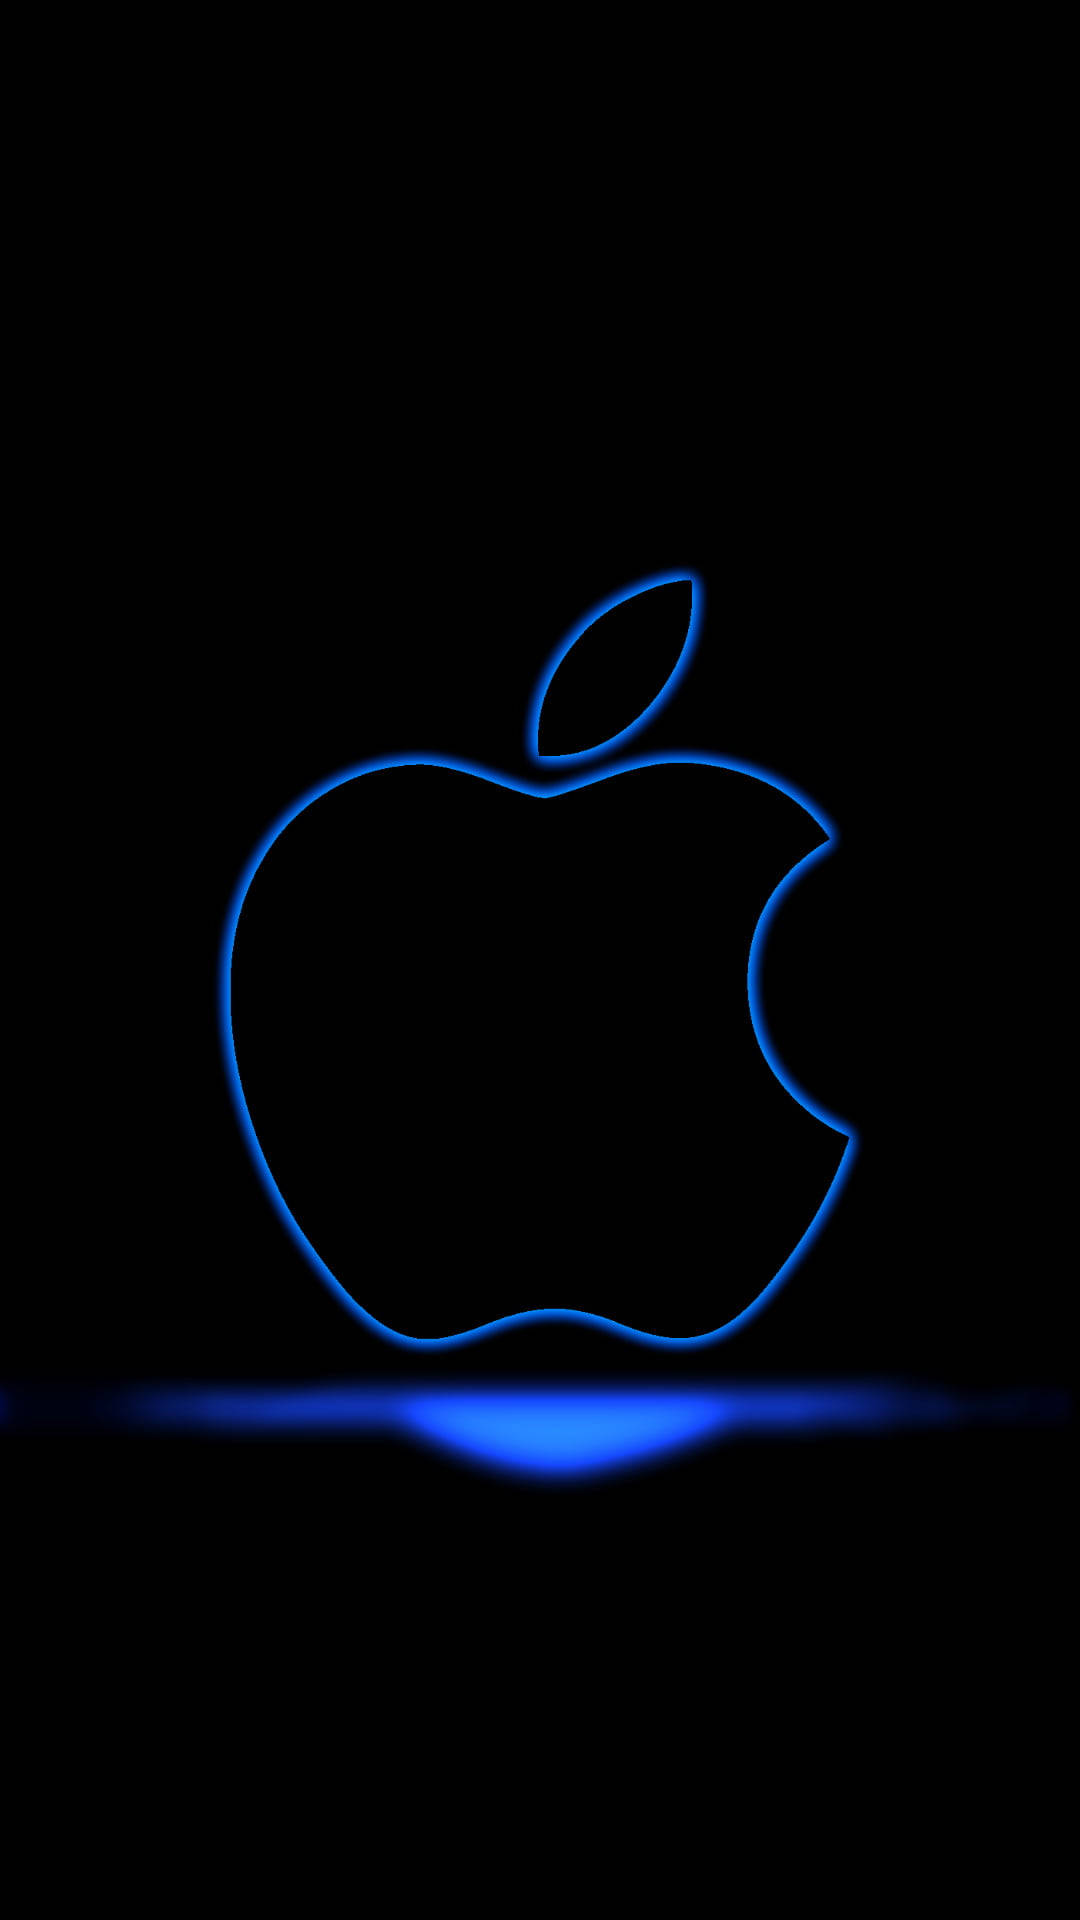 Stunning Apple Logo Against A Geometric Blue Backdrop Background